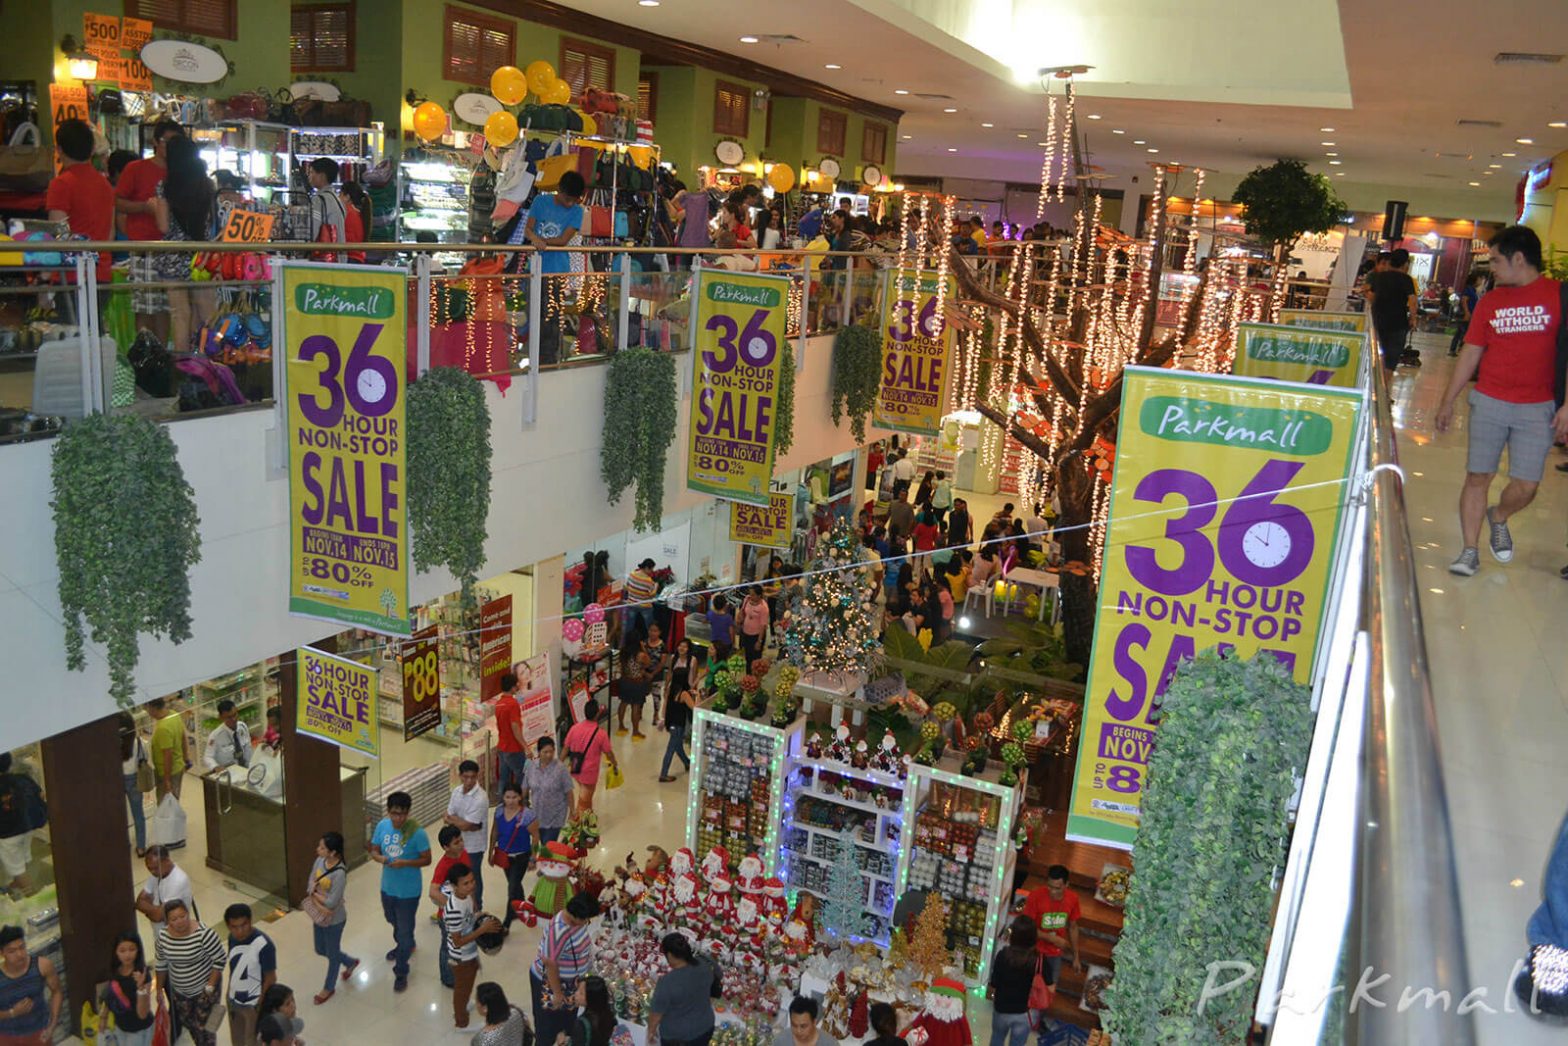 Bigger, grander Parkmall non-stop sale awaits shoppers